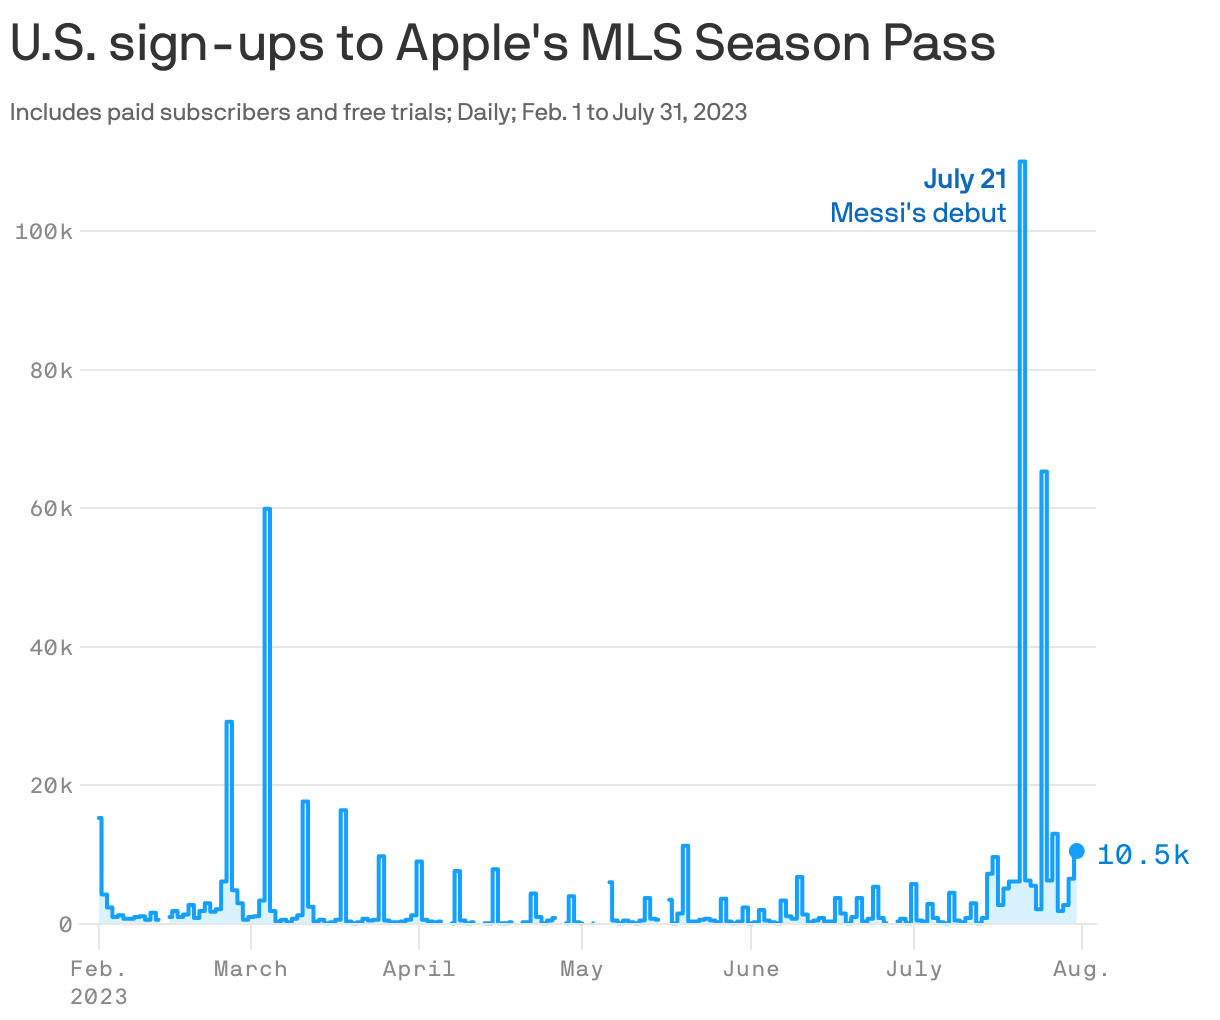 U.S. signups to Apple's MLS Season Pass